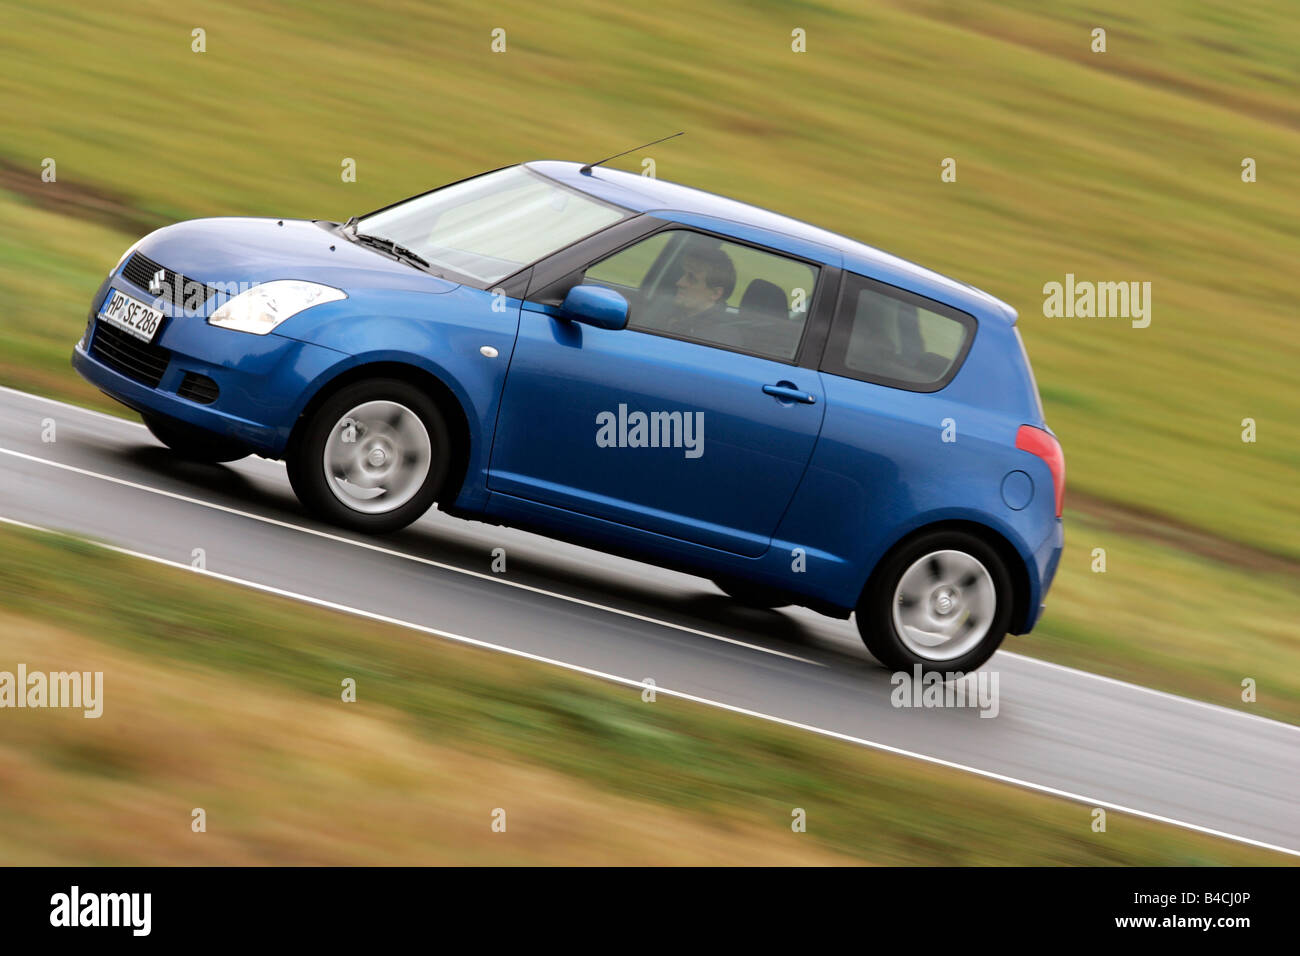 Suzuki swift : plus de 1 803 photos de stock libres de droits